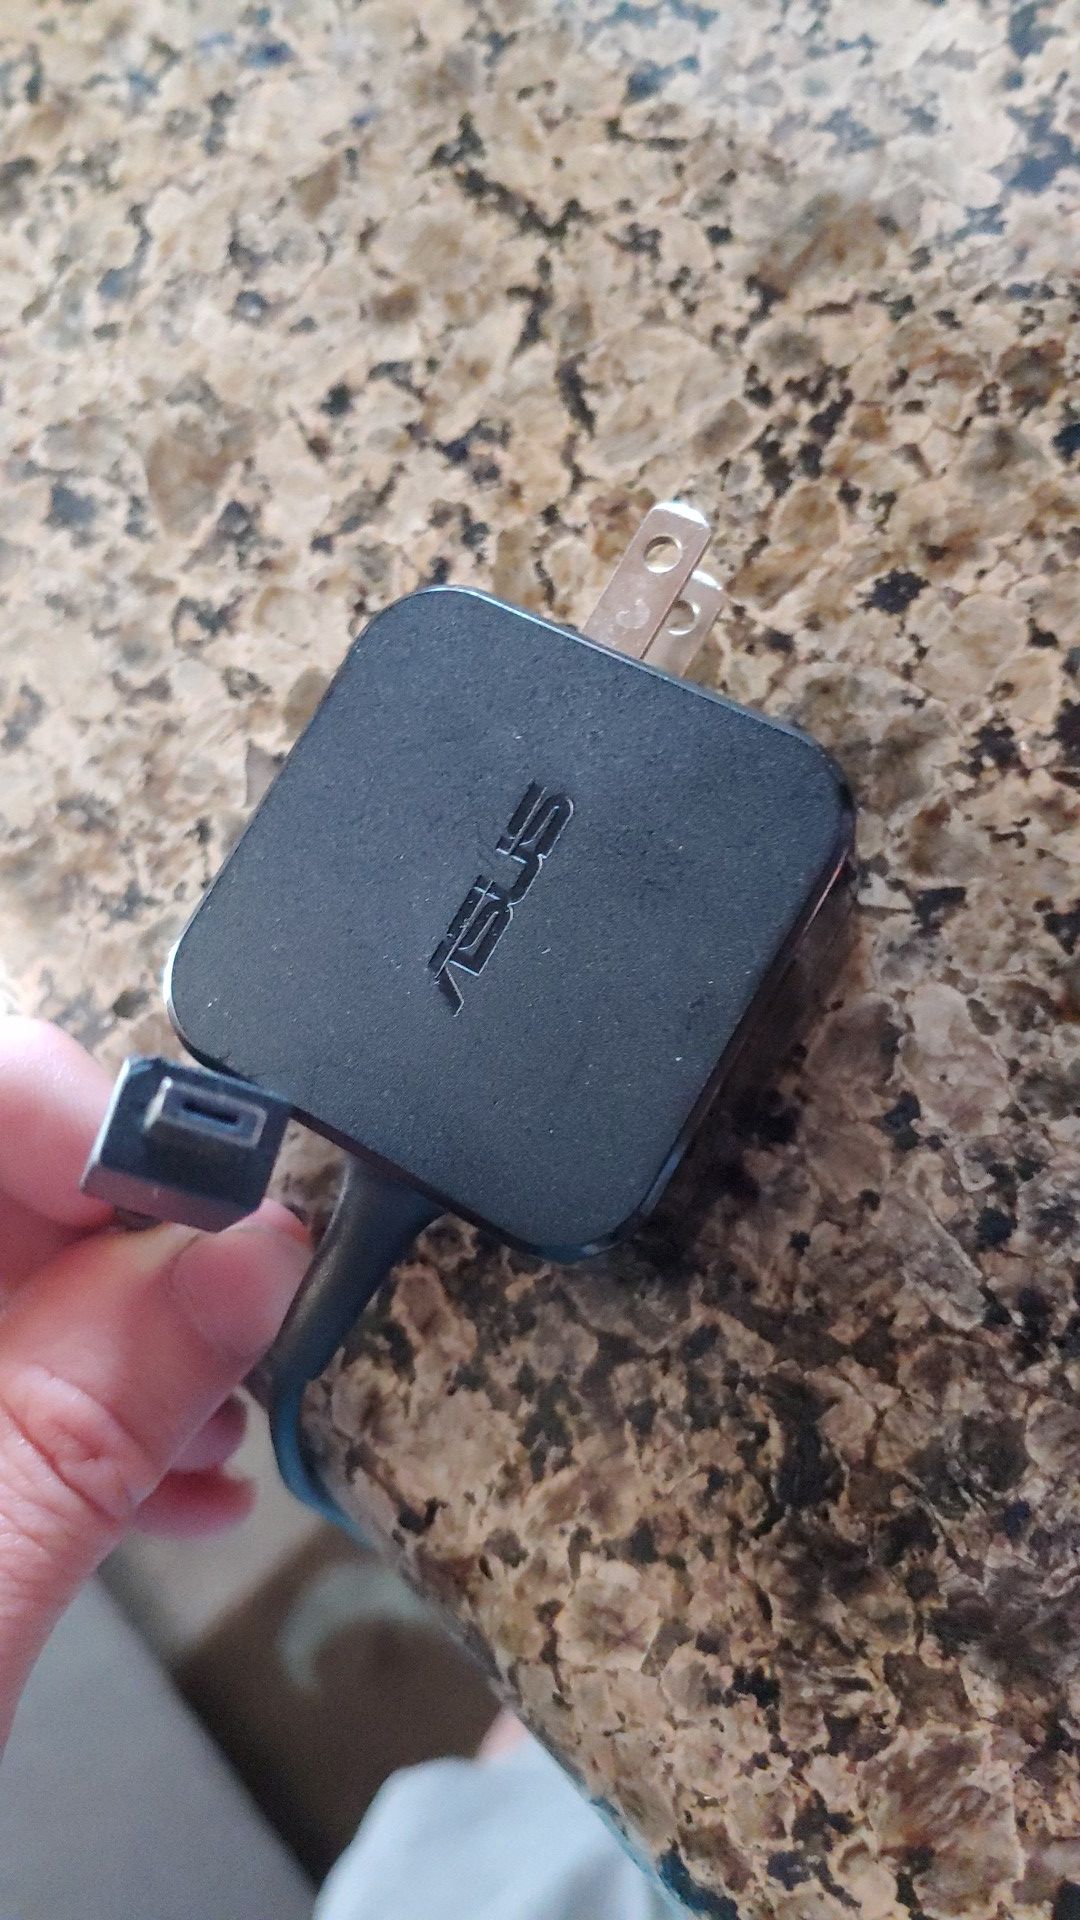 Asus chromebook charging cord